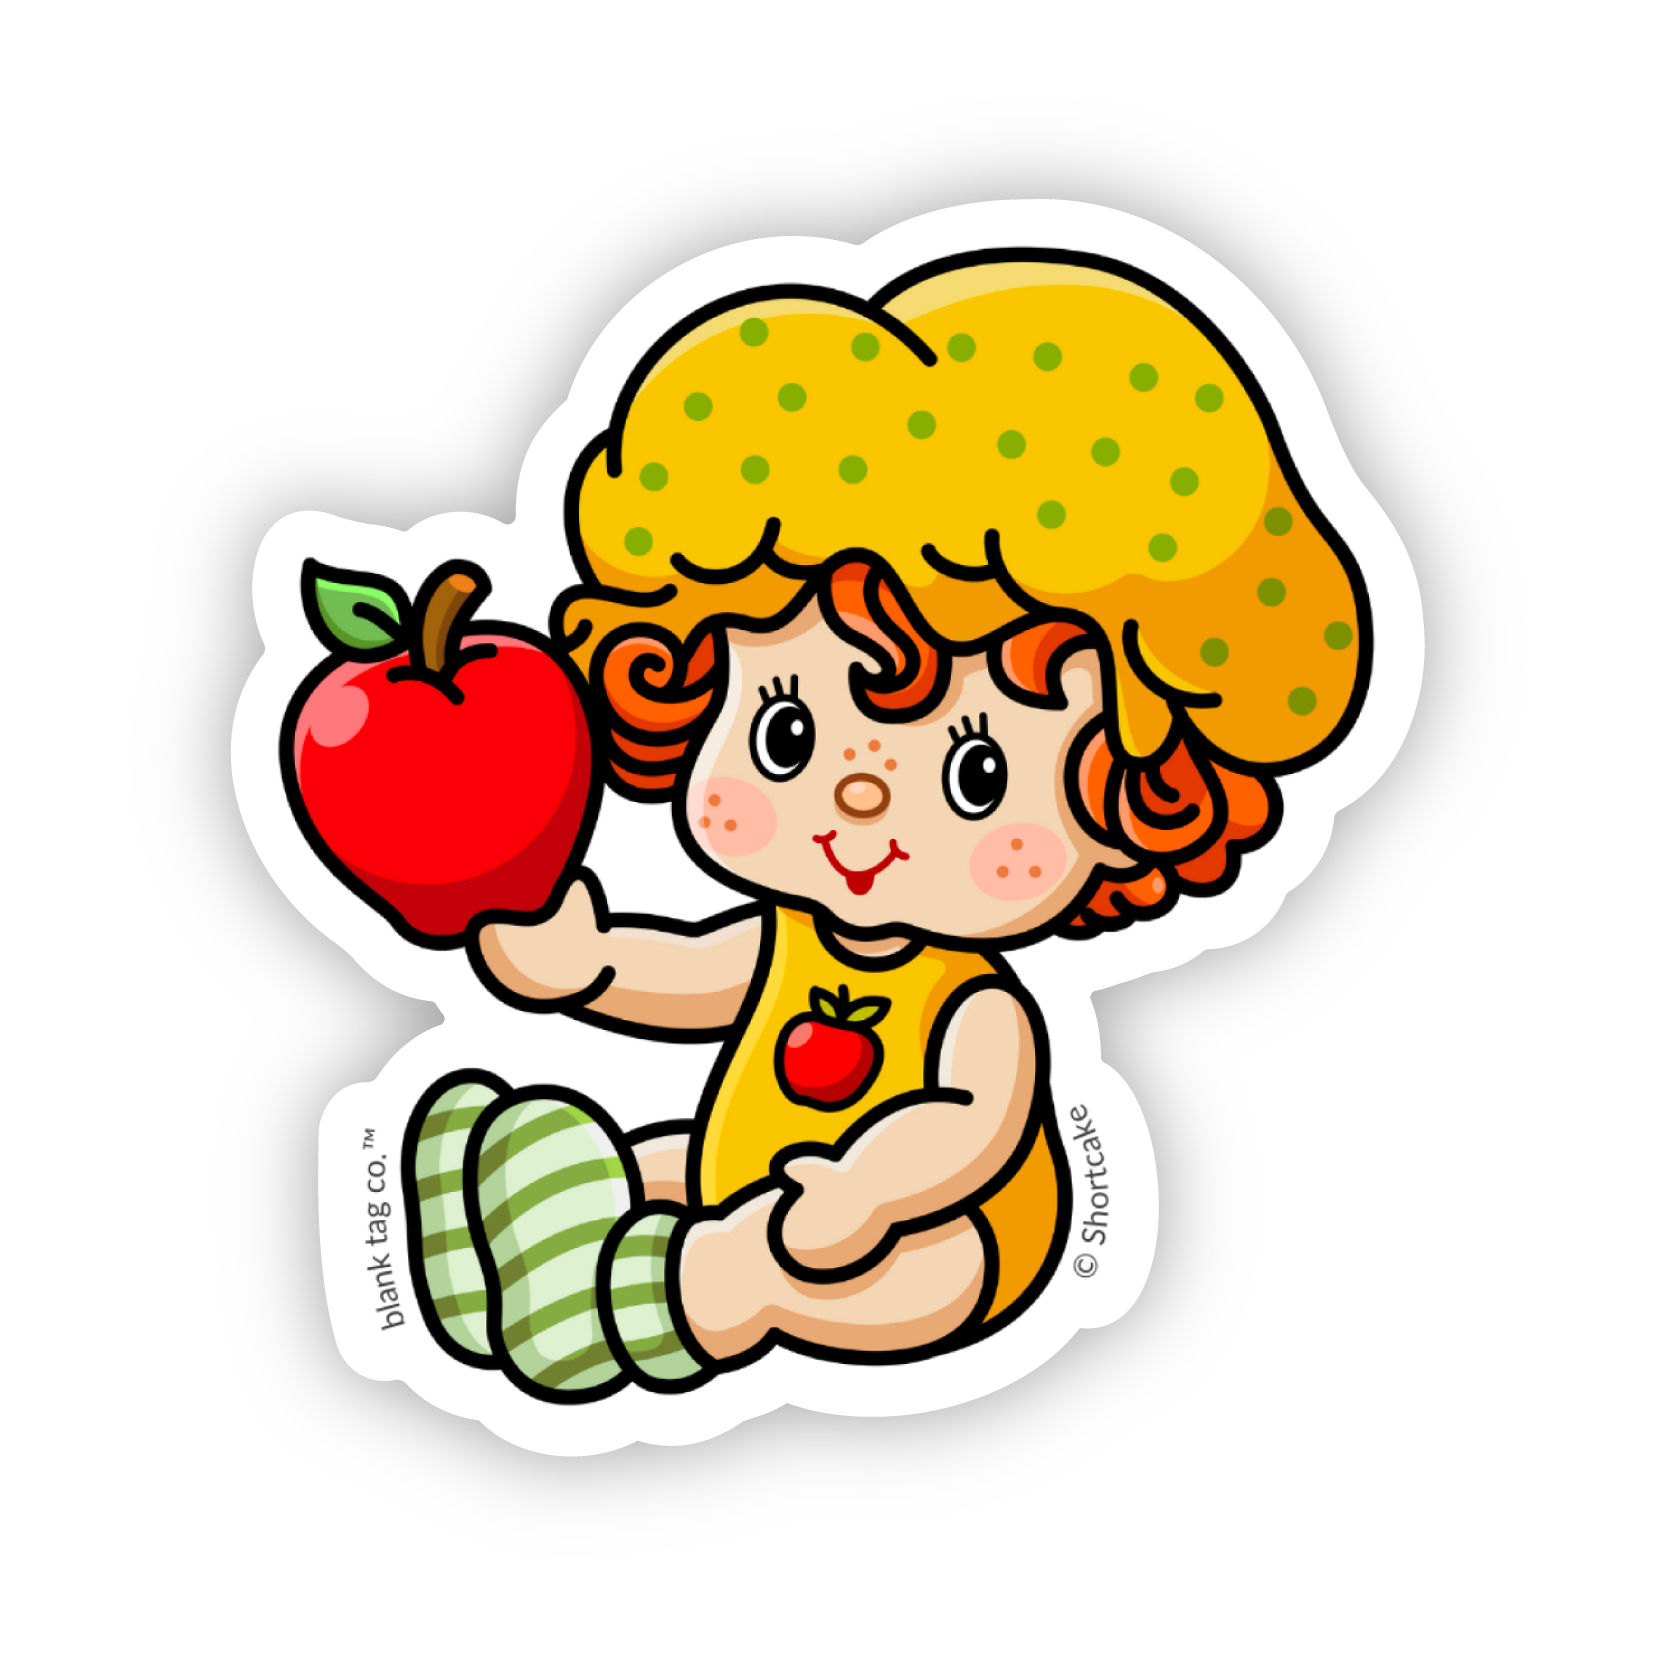 The Strawberry Shortcake Sticker Bundle